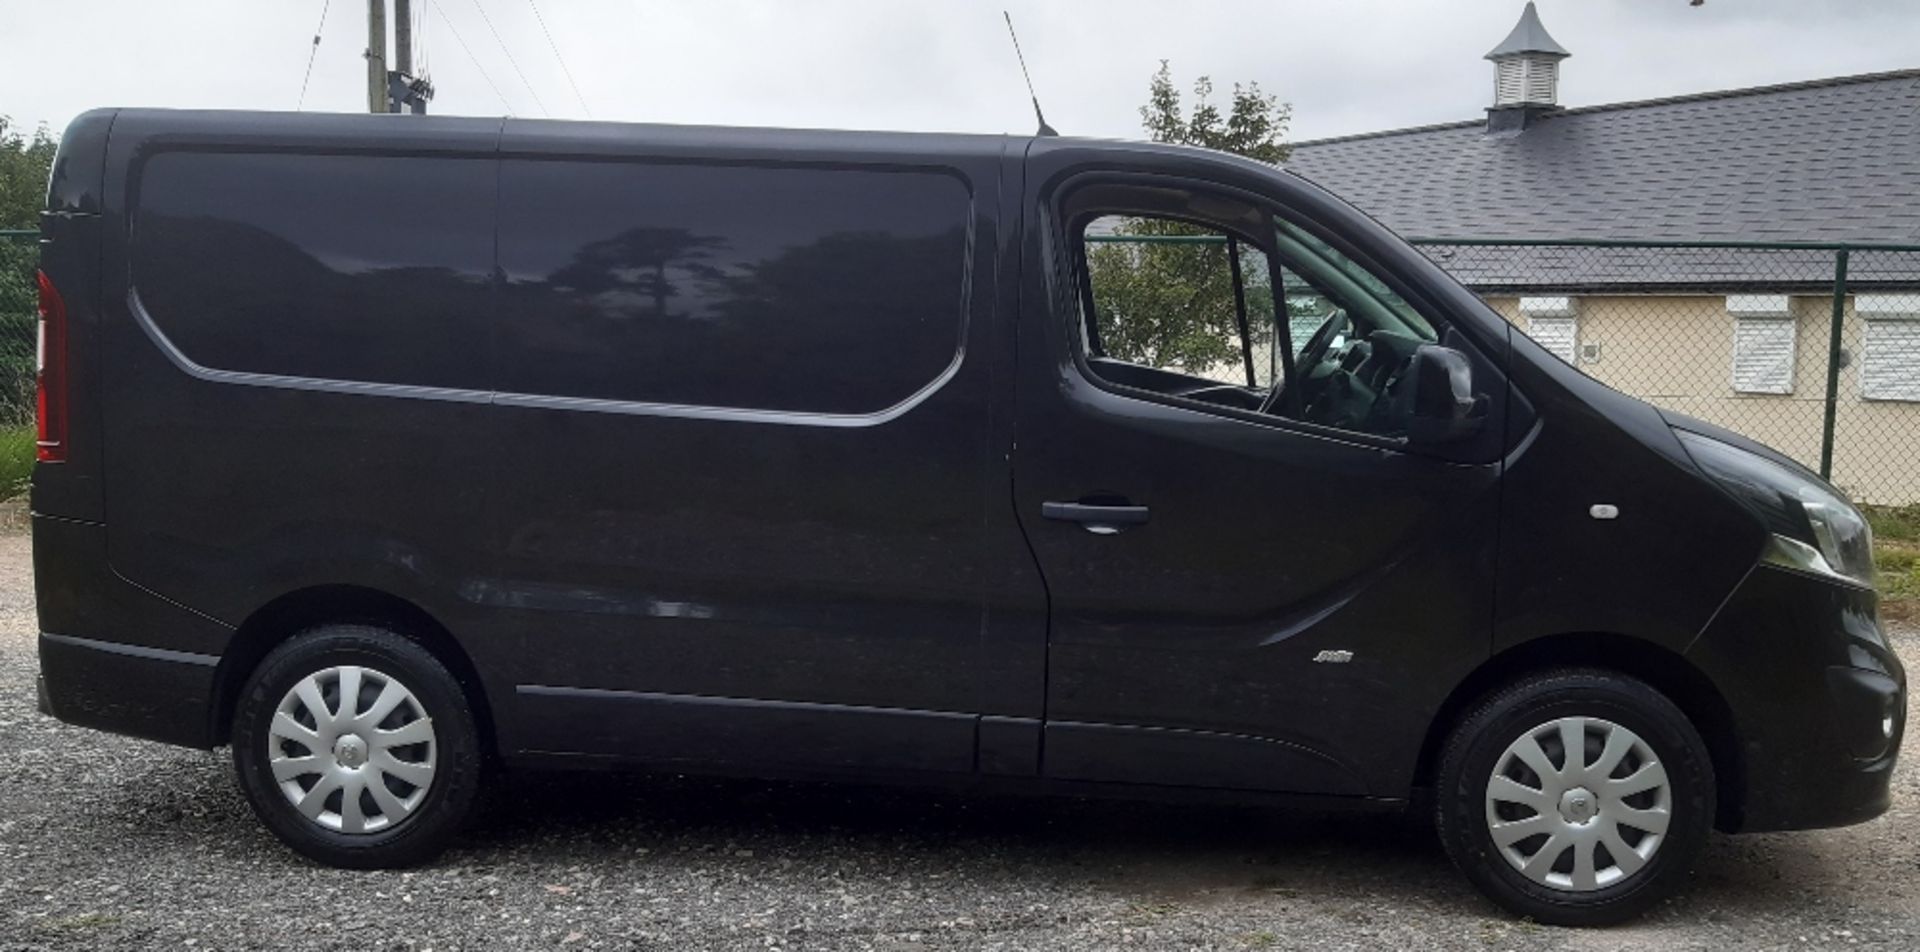 Vauxhall Vivaro 2-axle rigid body panel van - Image 2 of 10